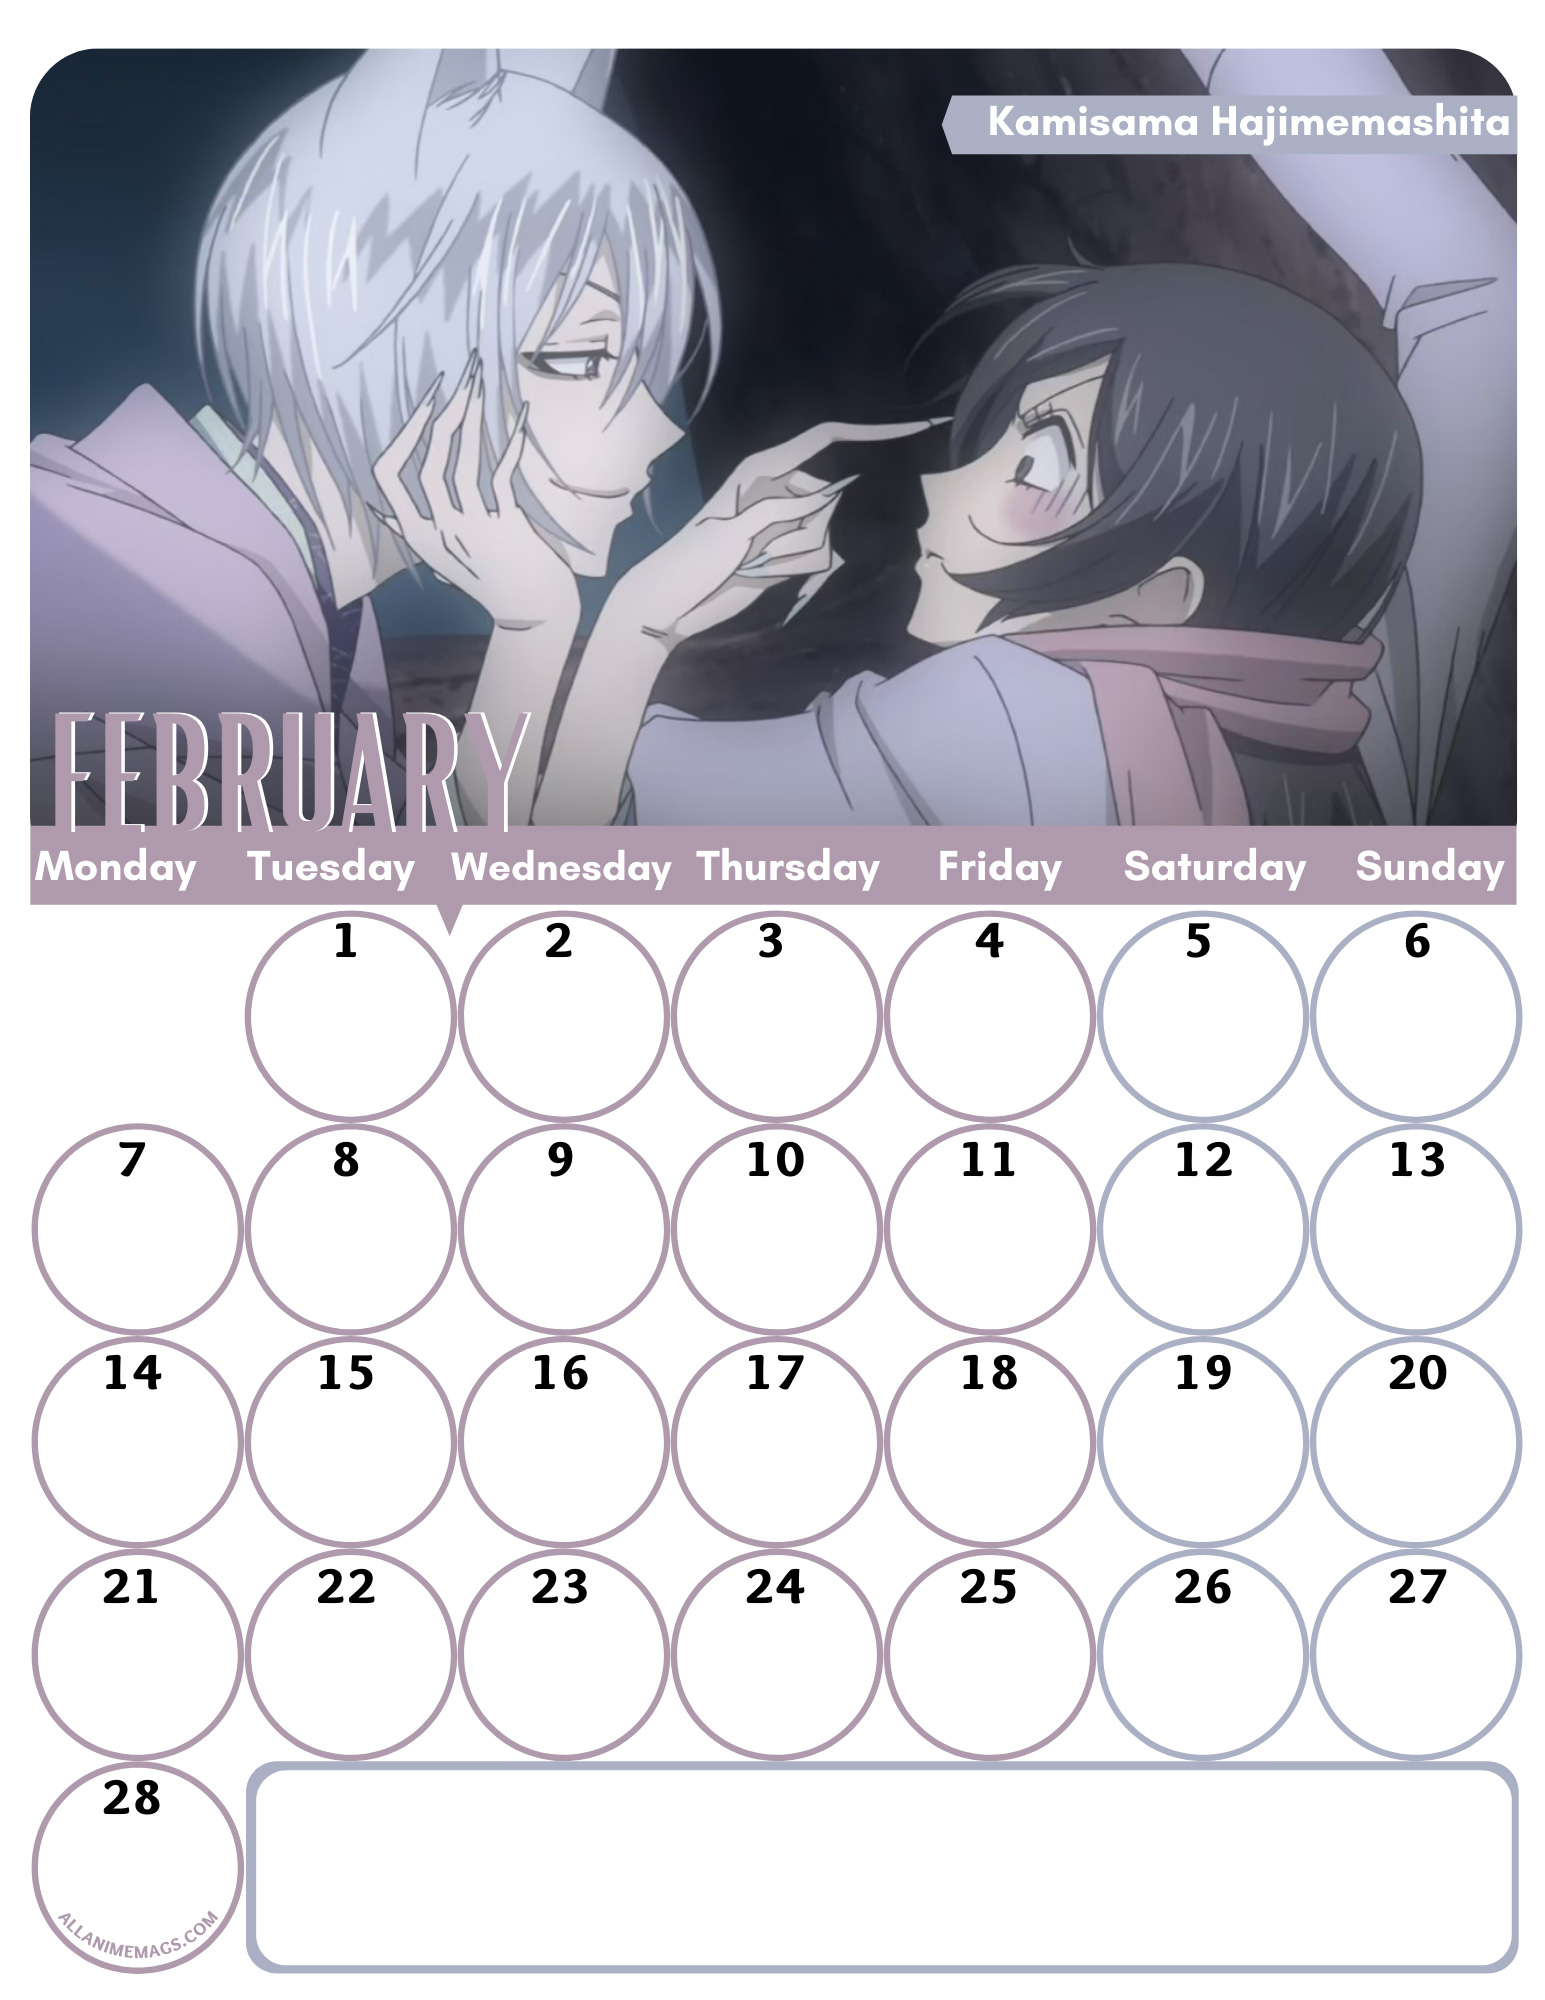 02-February-Romance-Anime-Wall-Calendar-2022-AllAnimeMag-Kamisama-Hajimemashita